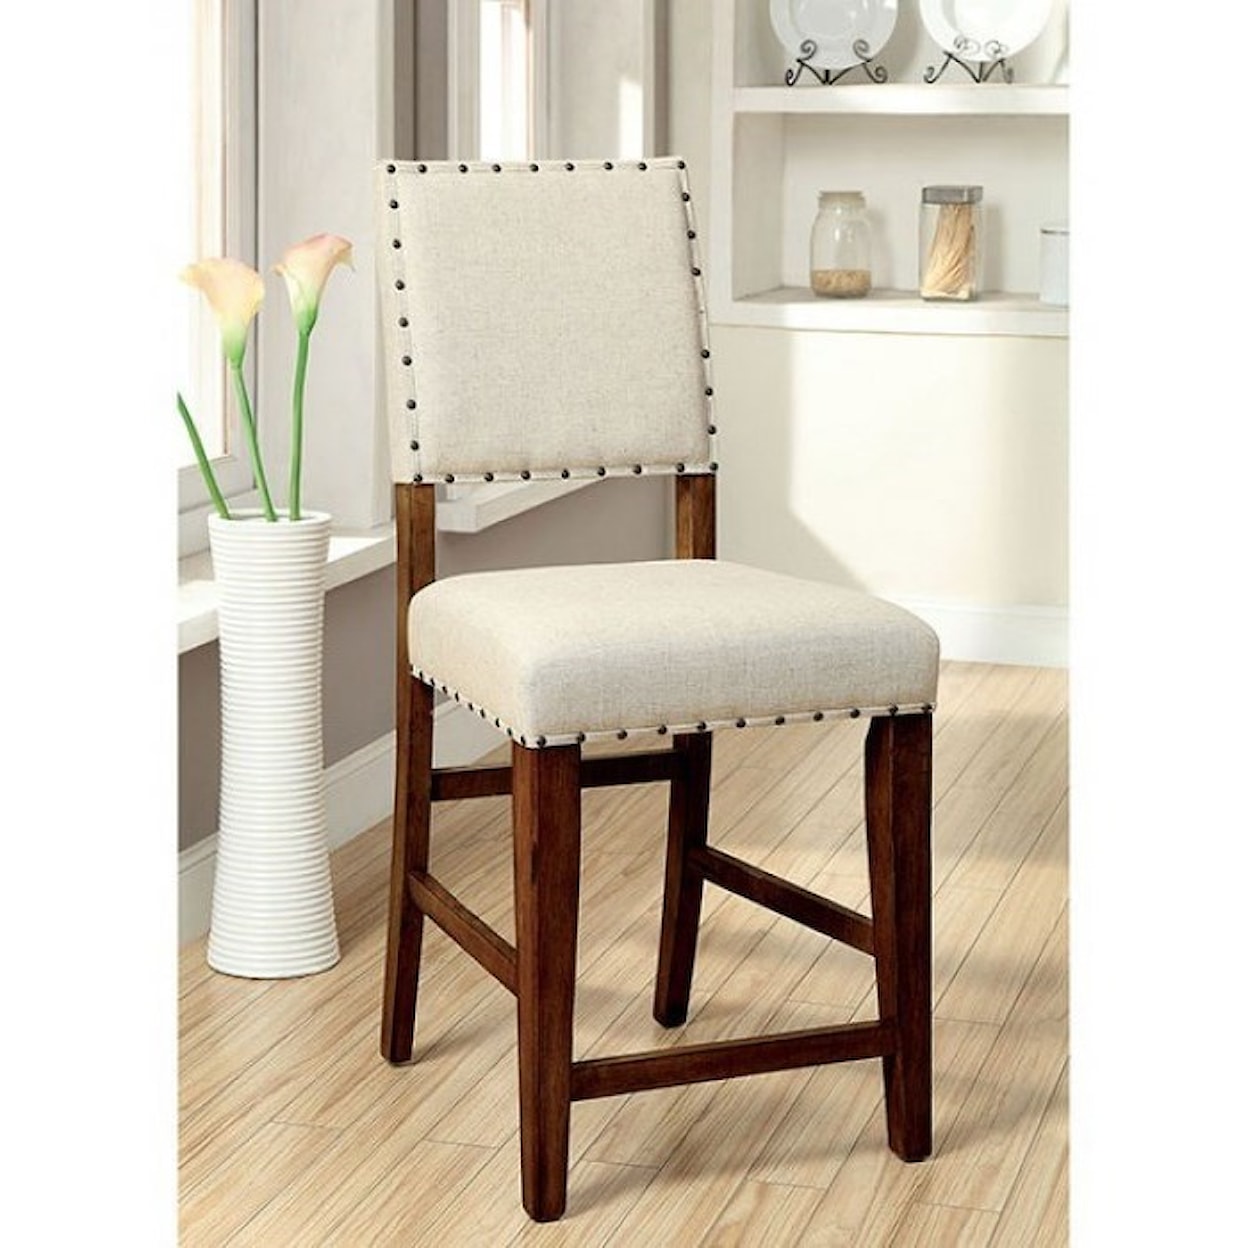 Furniture of America Sania III Counter Height Chair